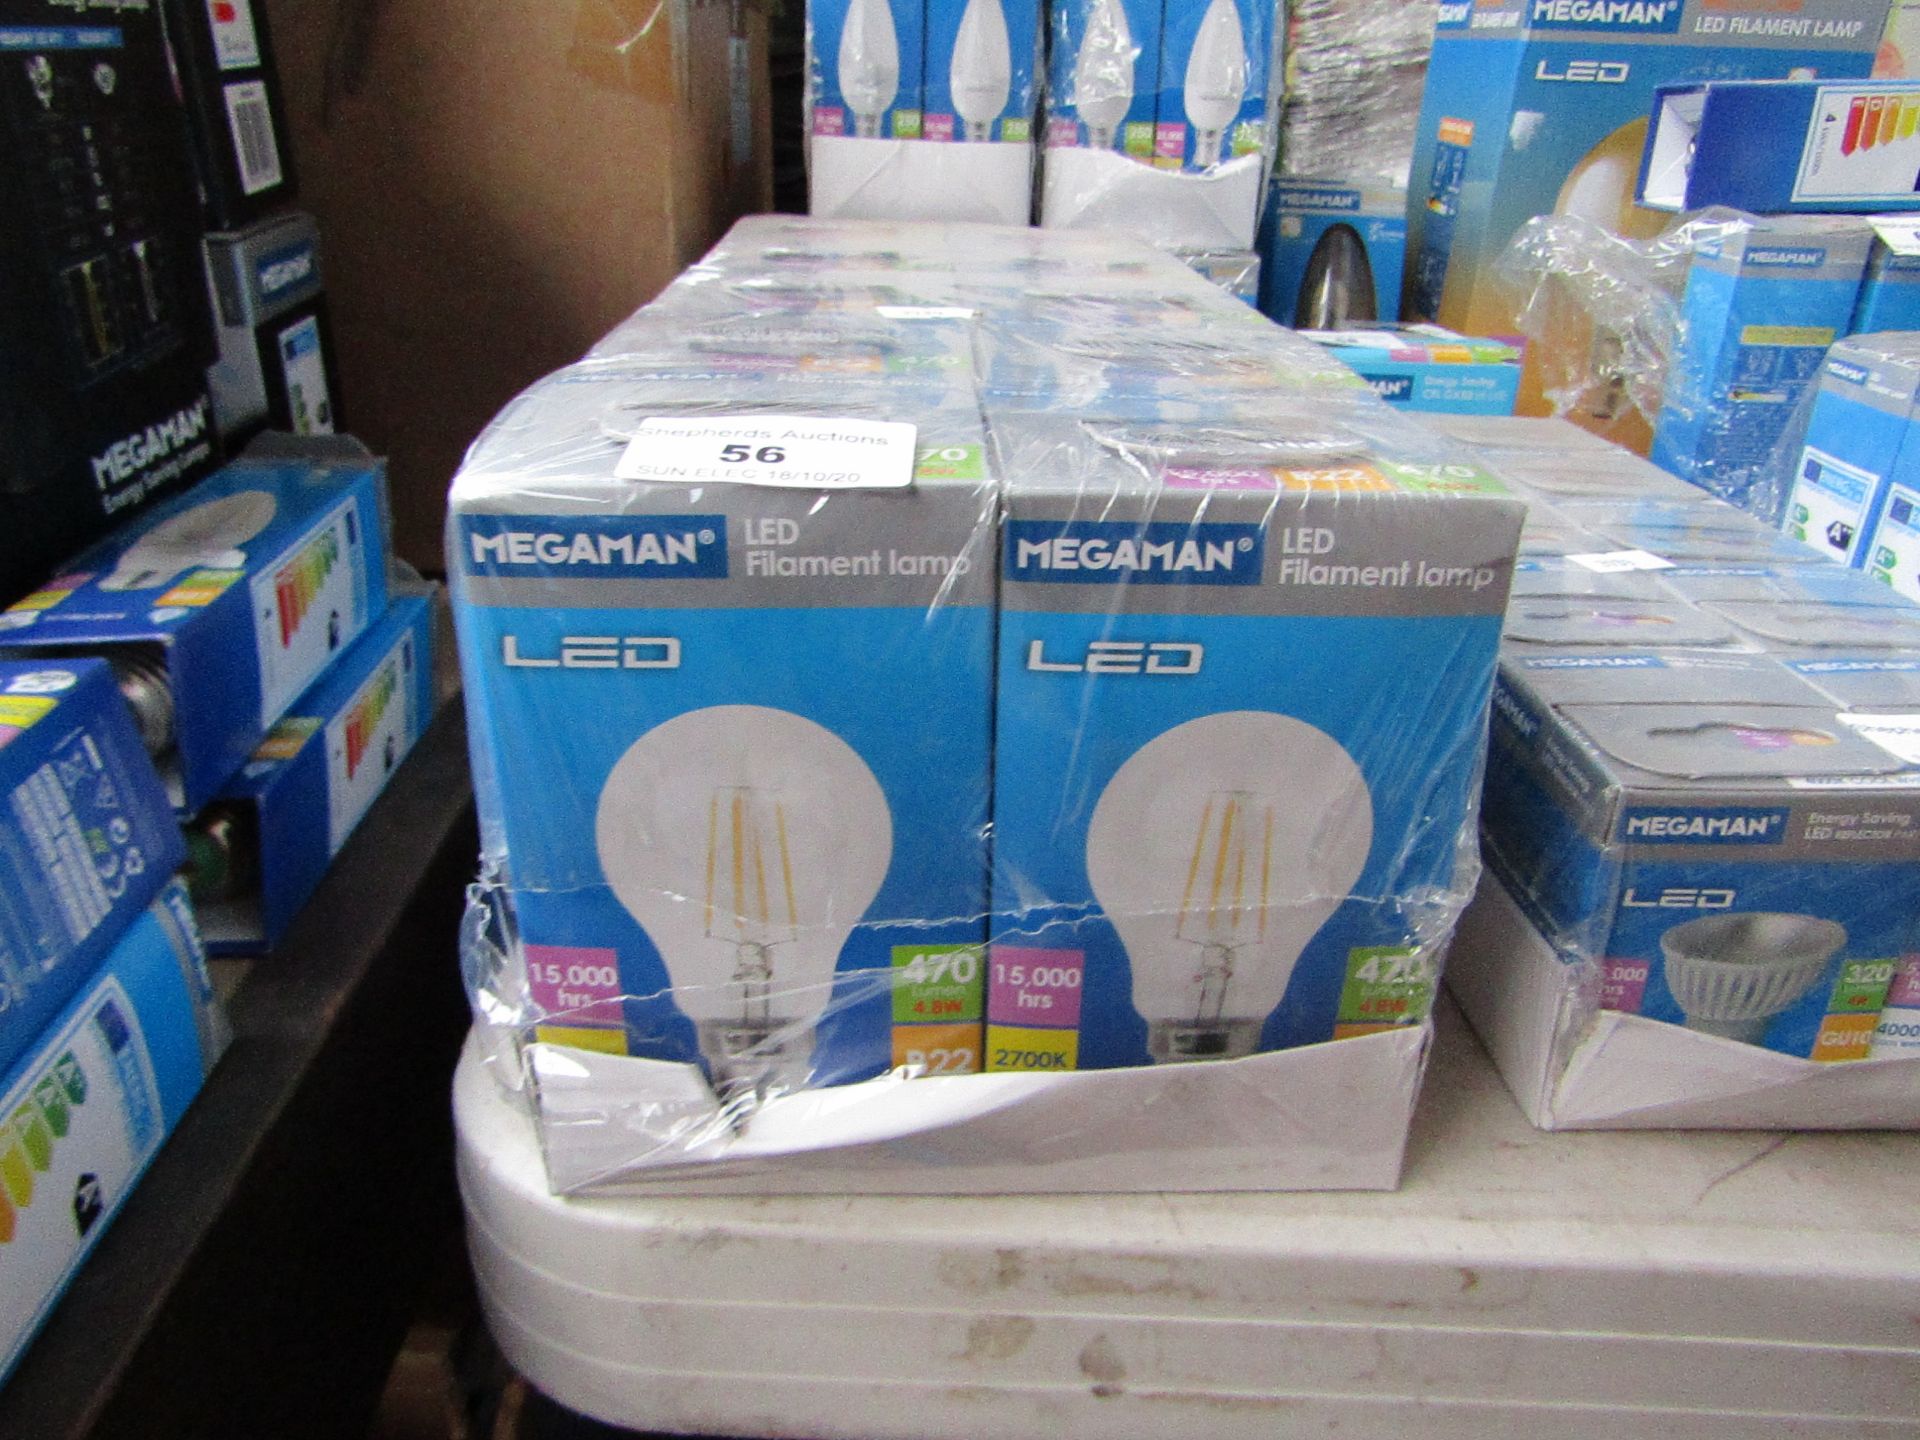 10x Megaman LED Filament lamp, new and boxed. 15,000Hrs / B22 / 470 Lumens